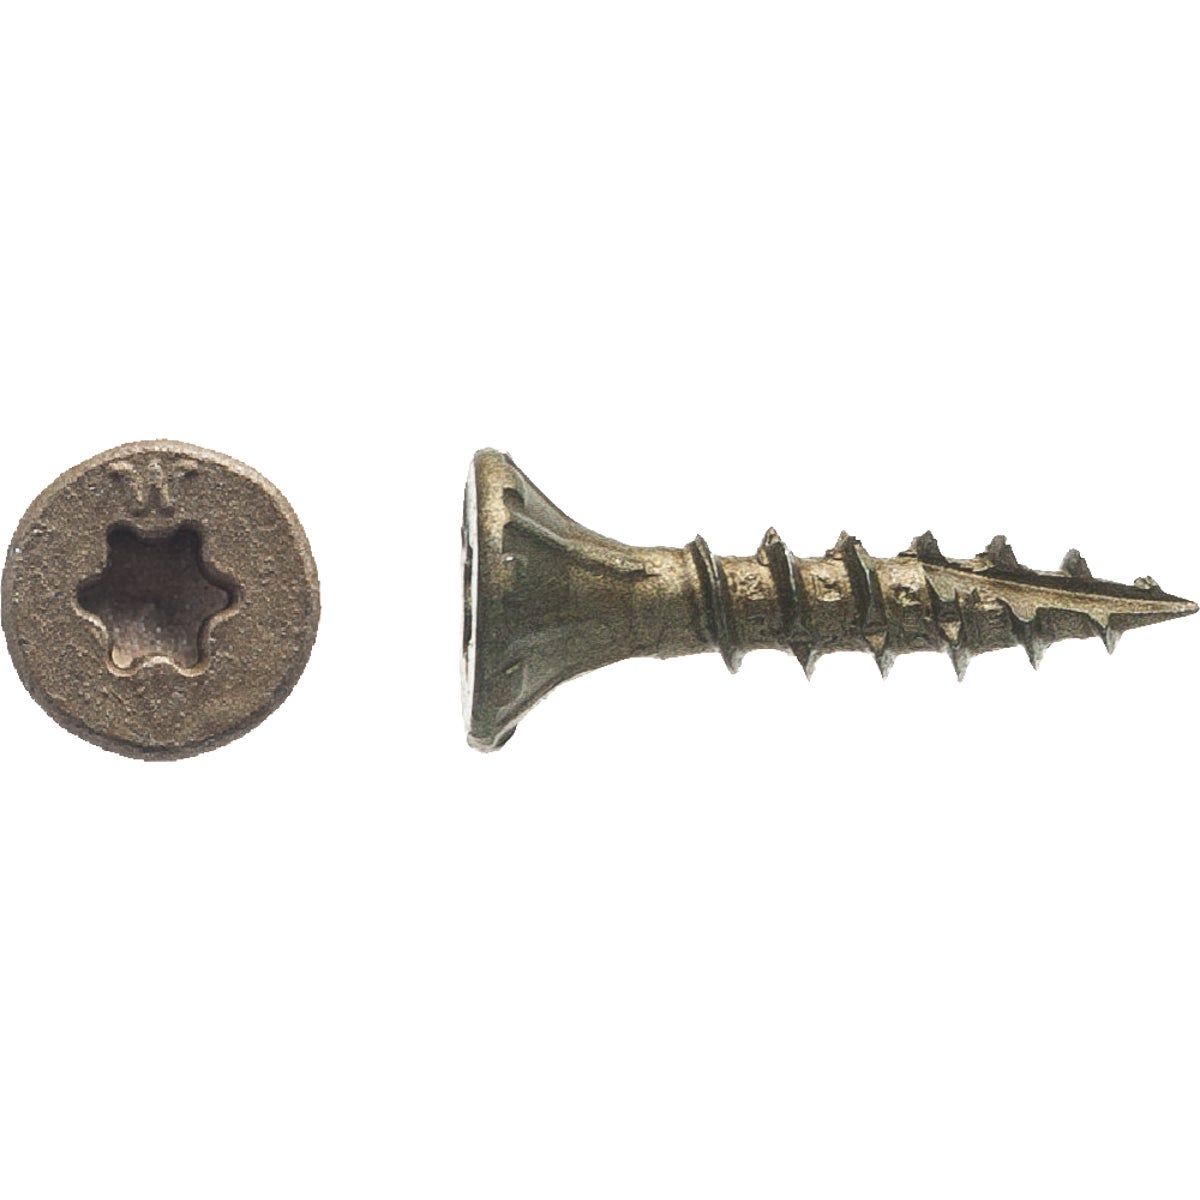 Item 201276, Bronze wood screw features: flat head with nibs, deep thread, hardened 